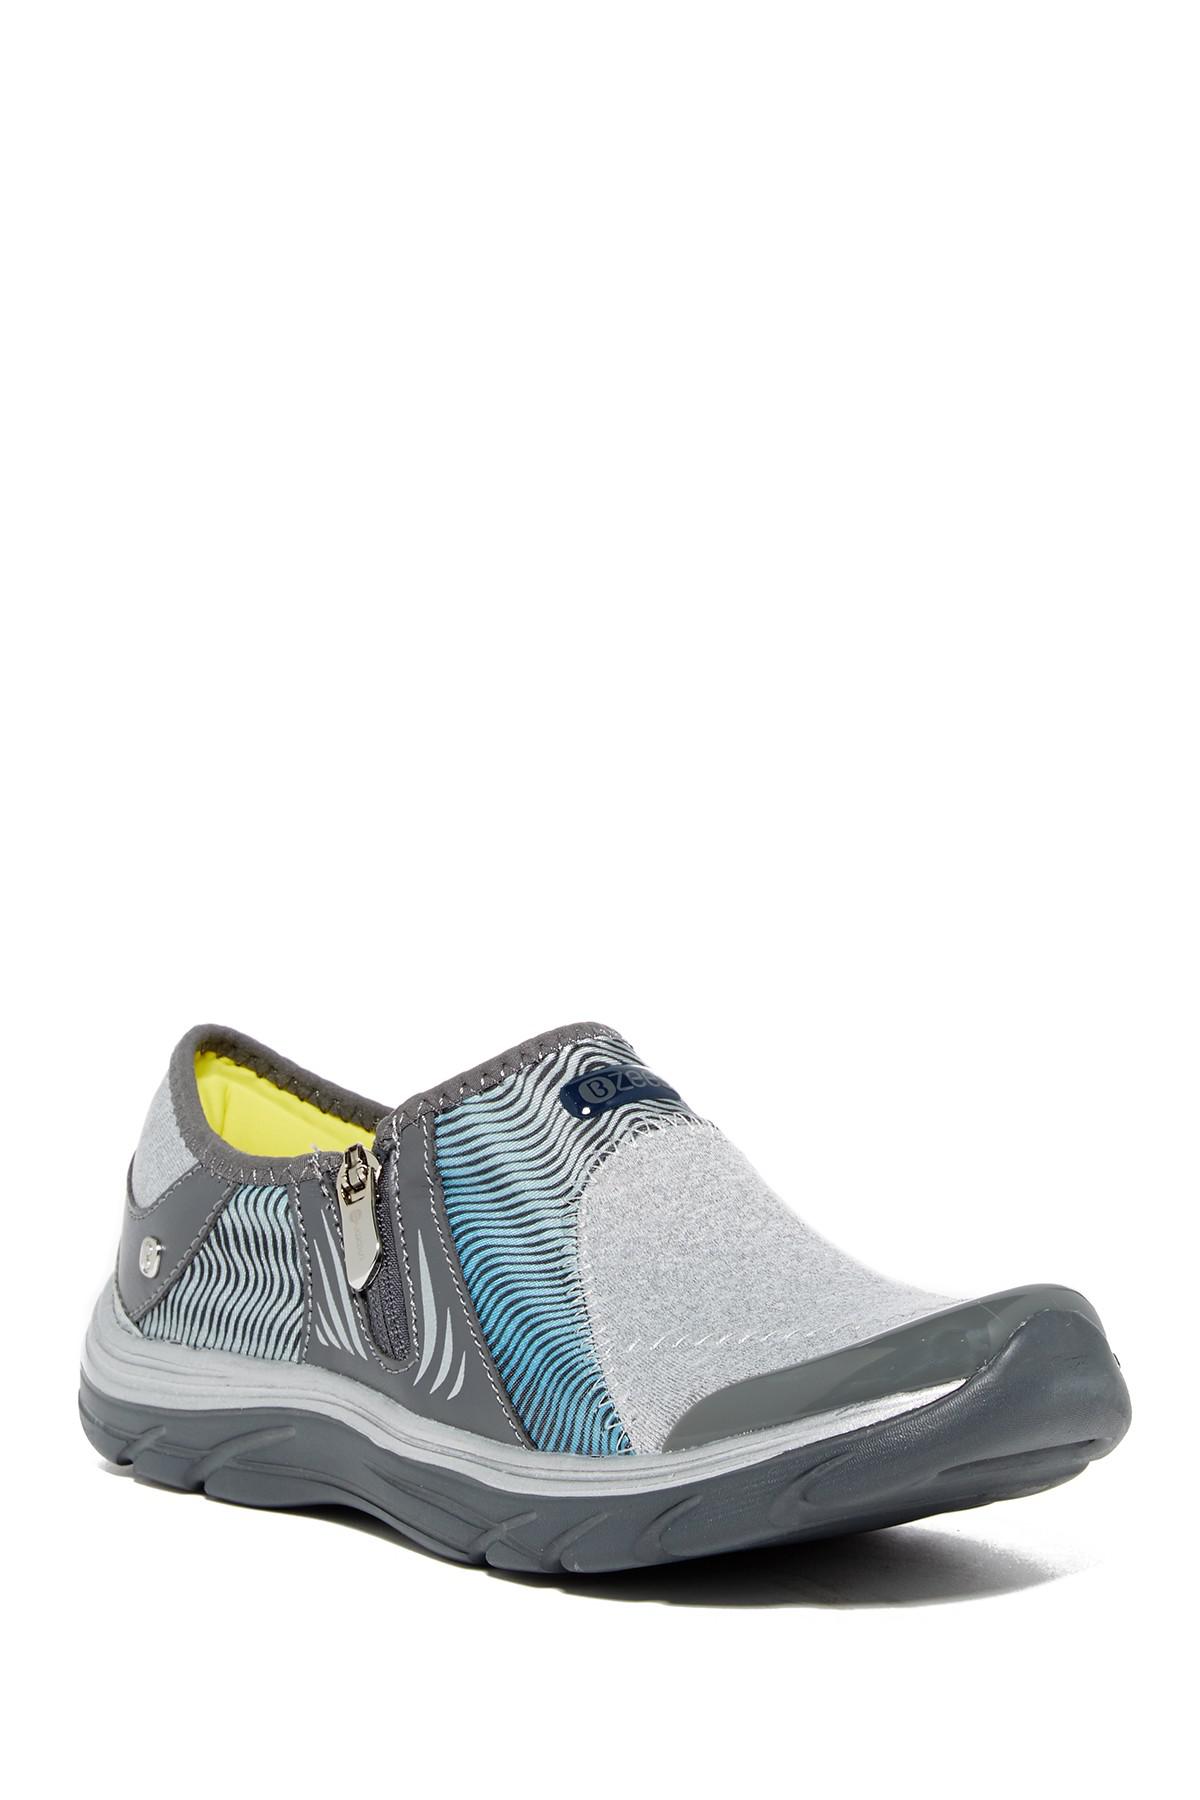 Bzees Rubber Balance Zip Sneaker in Grey (Gray) - Lyst